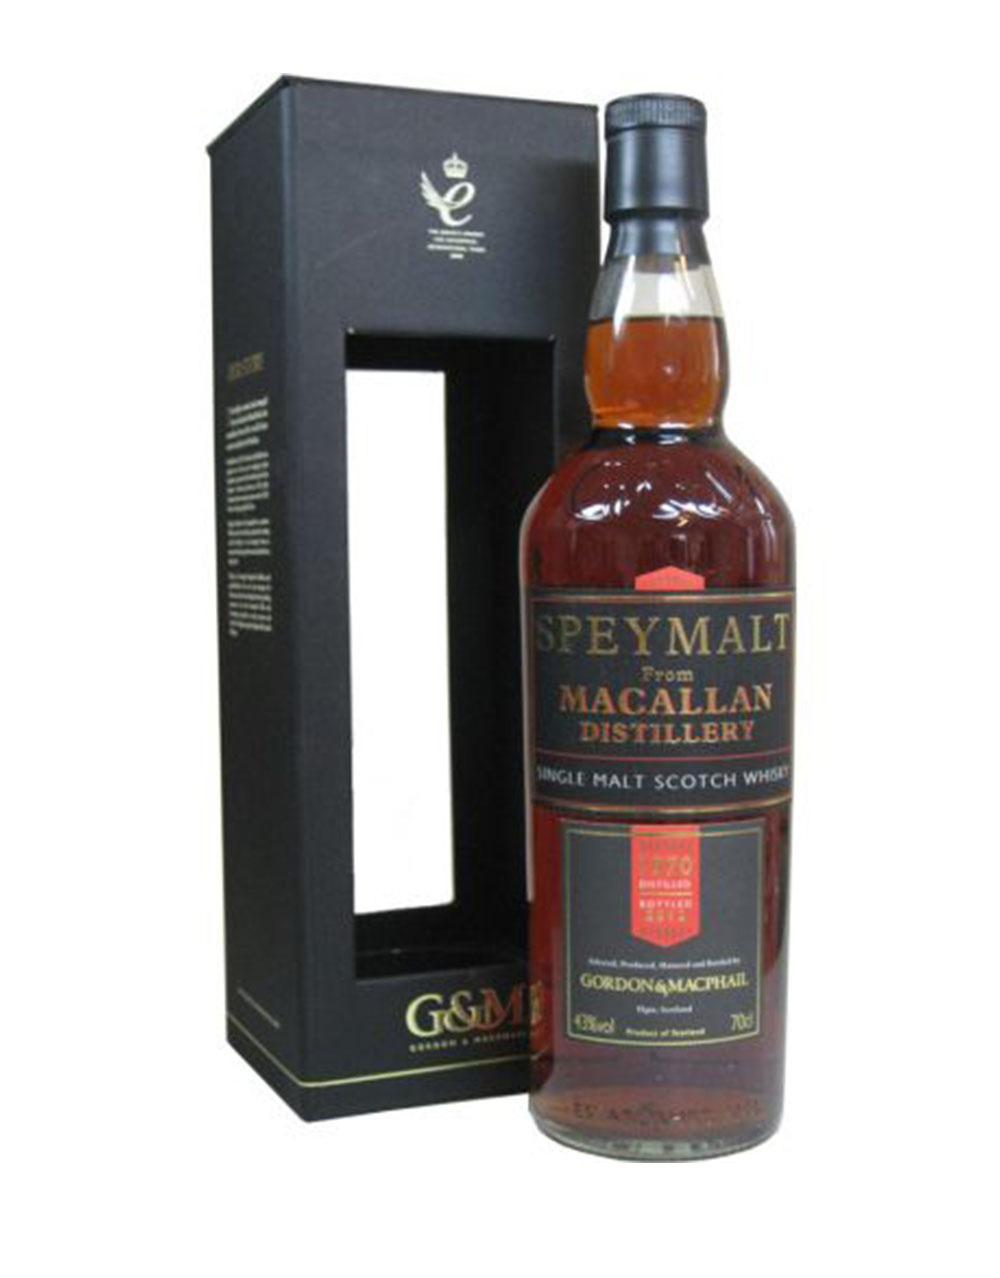 The Macallan Speymalt 42 Year Old Single Malt Scotch Whisky